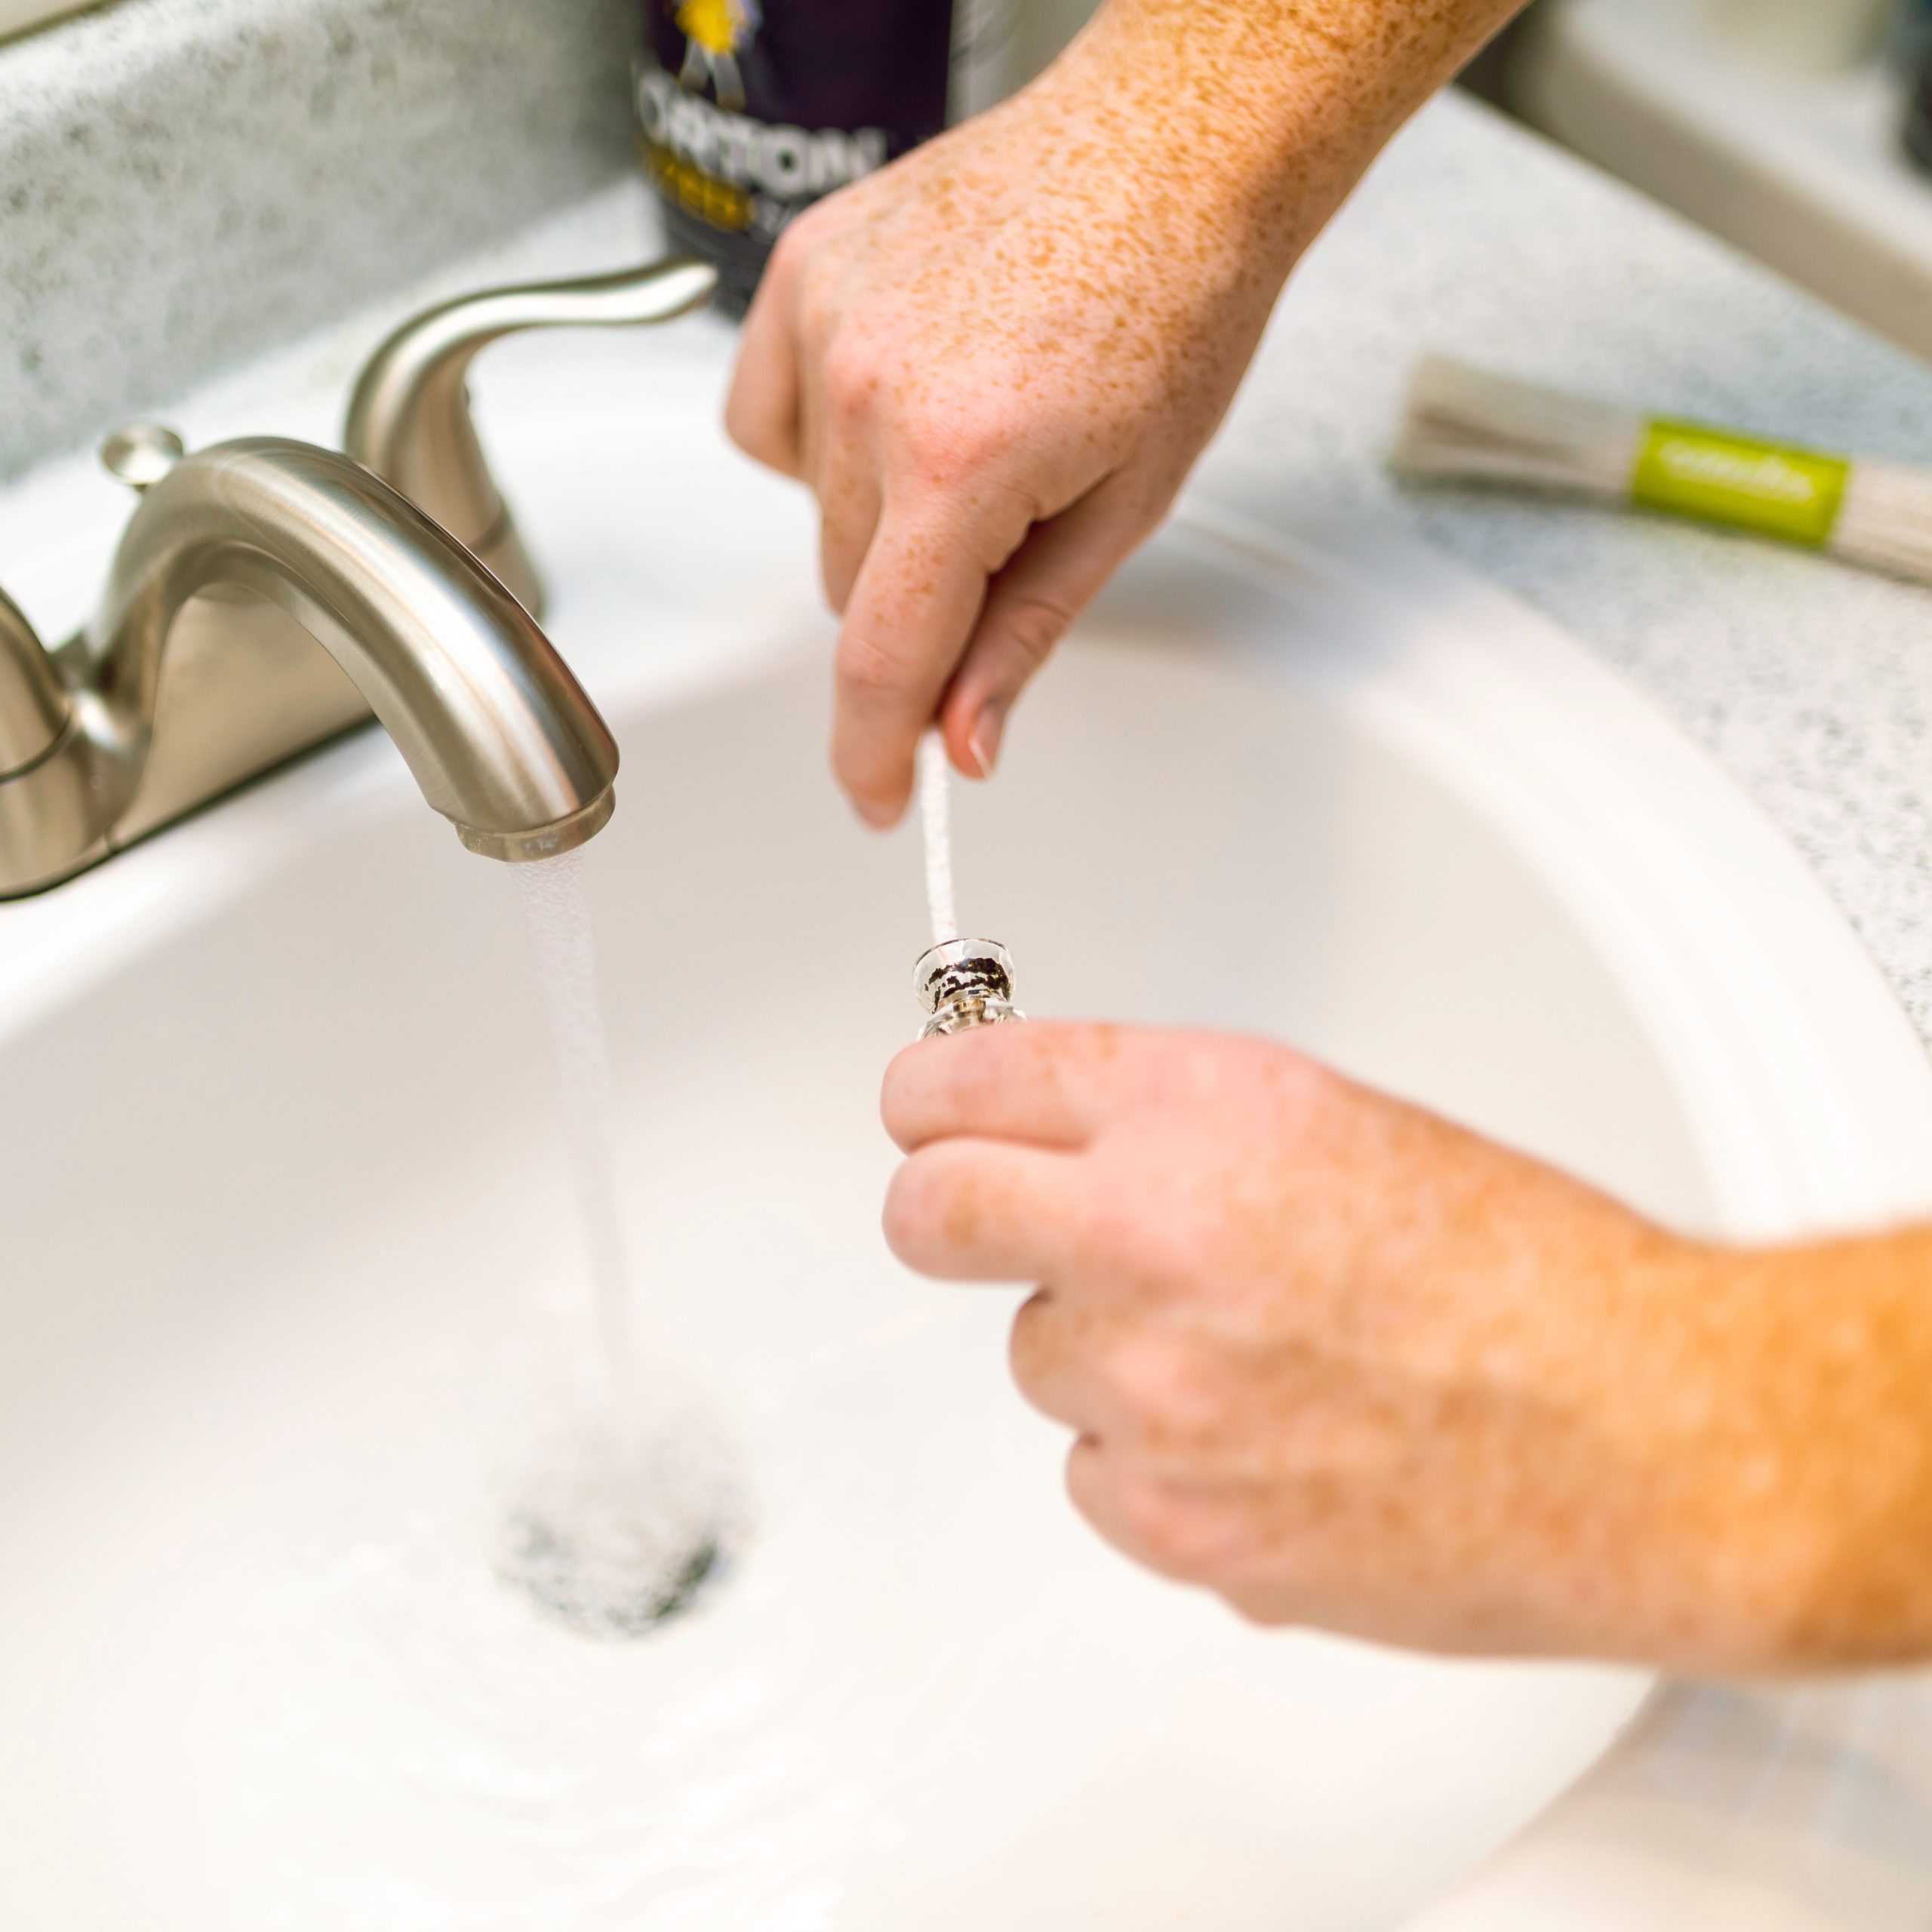 Plumbing Leak Repair Tips And Prevention Watters Plumbing